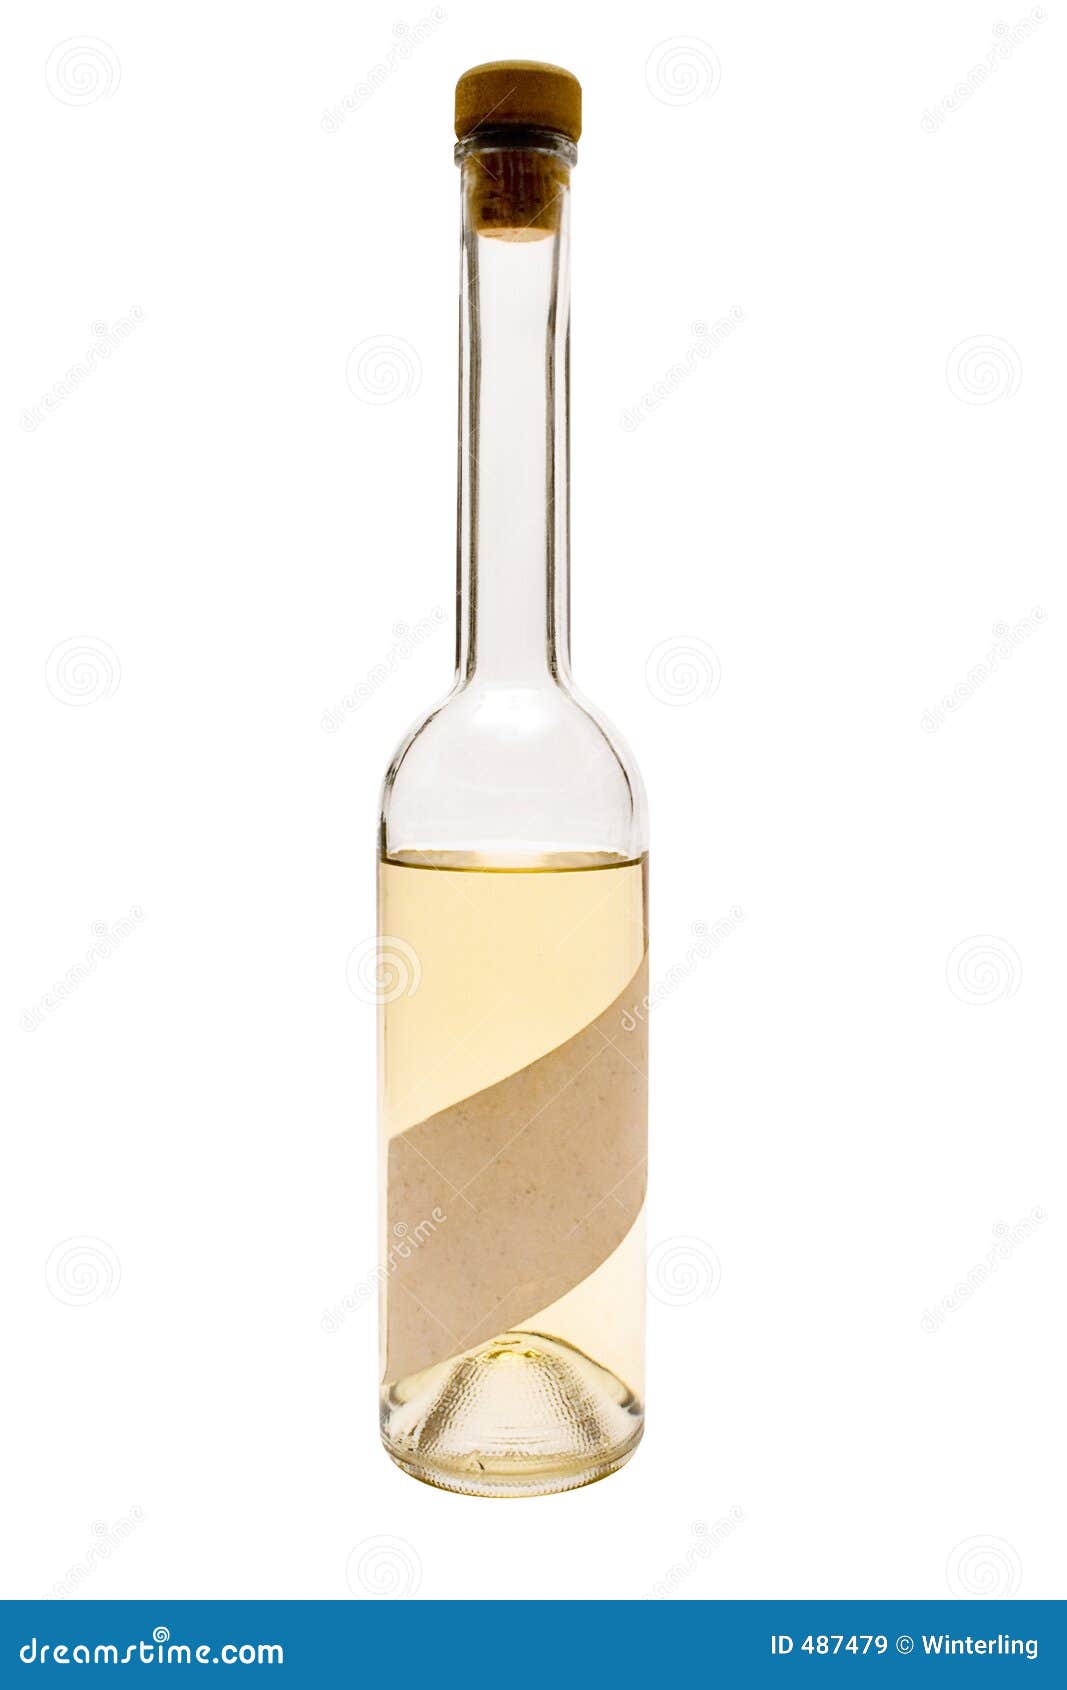 clear bottle of booze w/ blank label (path included)